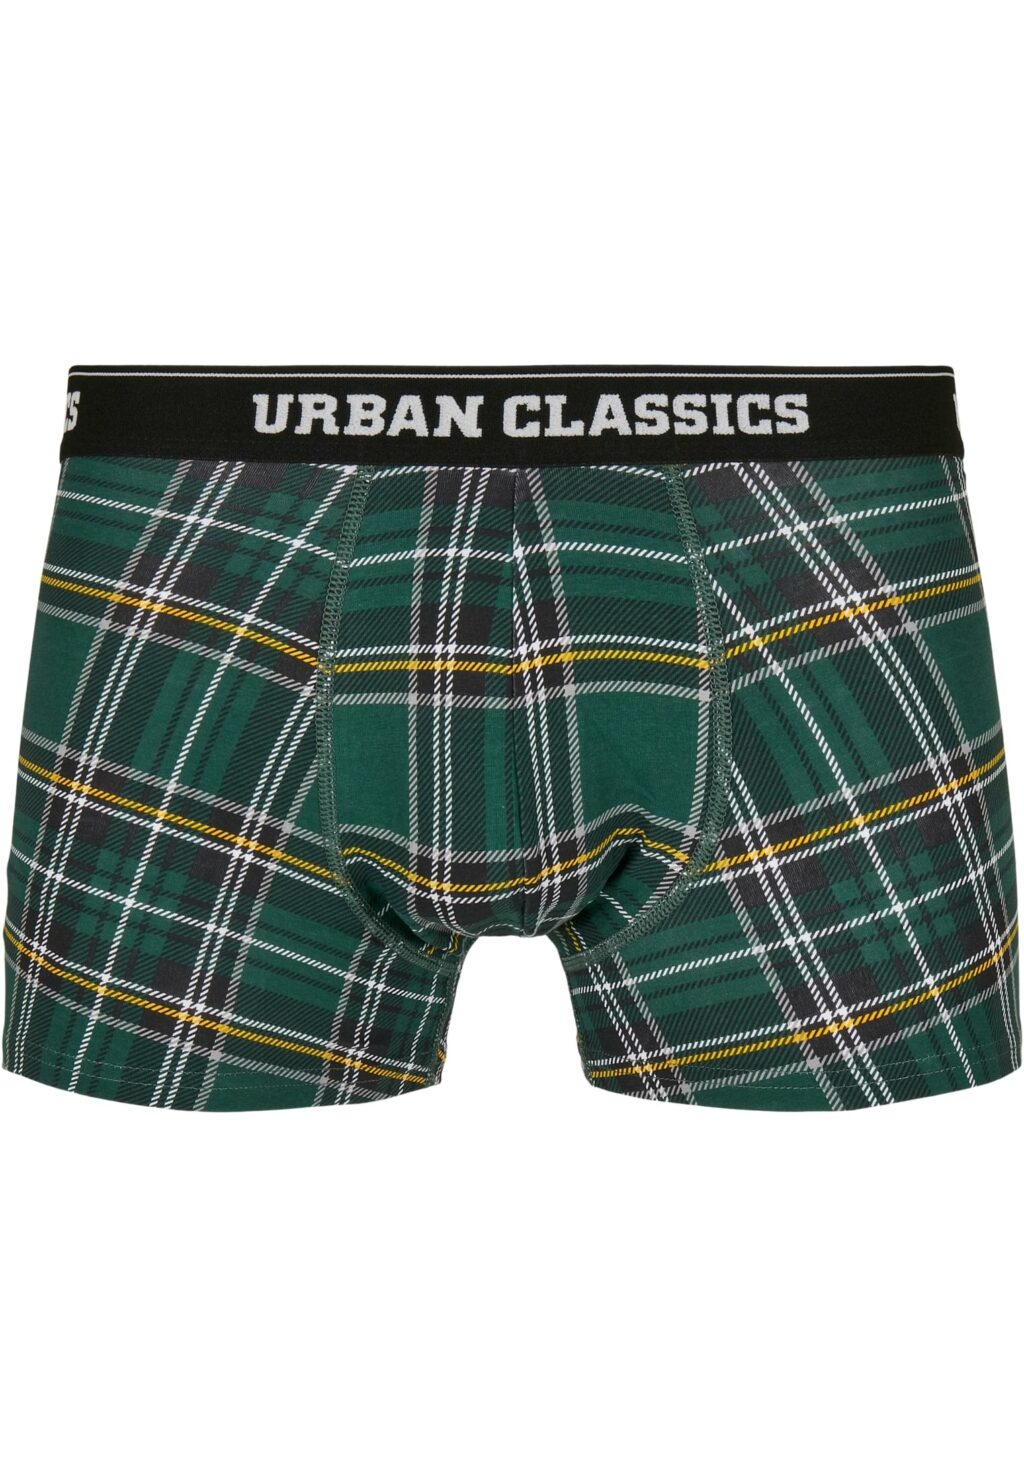 Urban Classics Boxer Shorts 3-Pack dgrn plaidaop+btlgrn/dblu+dgrn TB3841